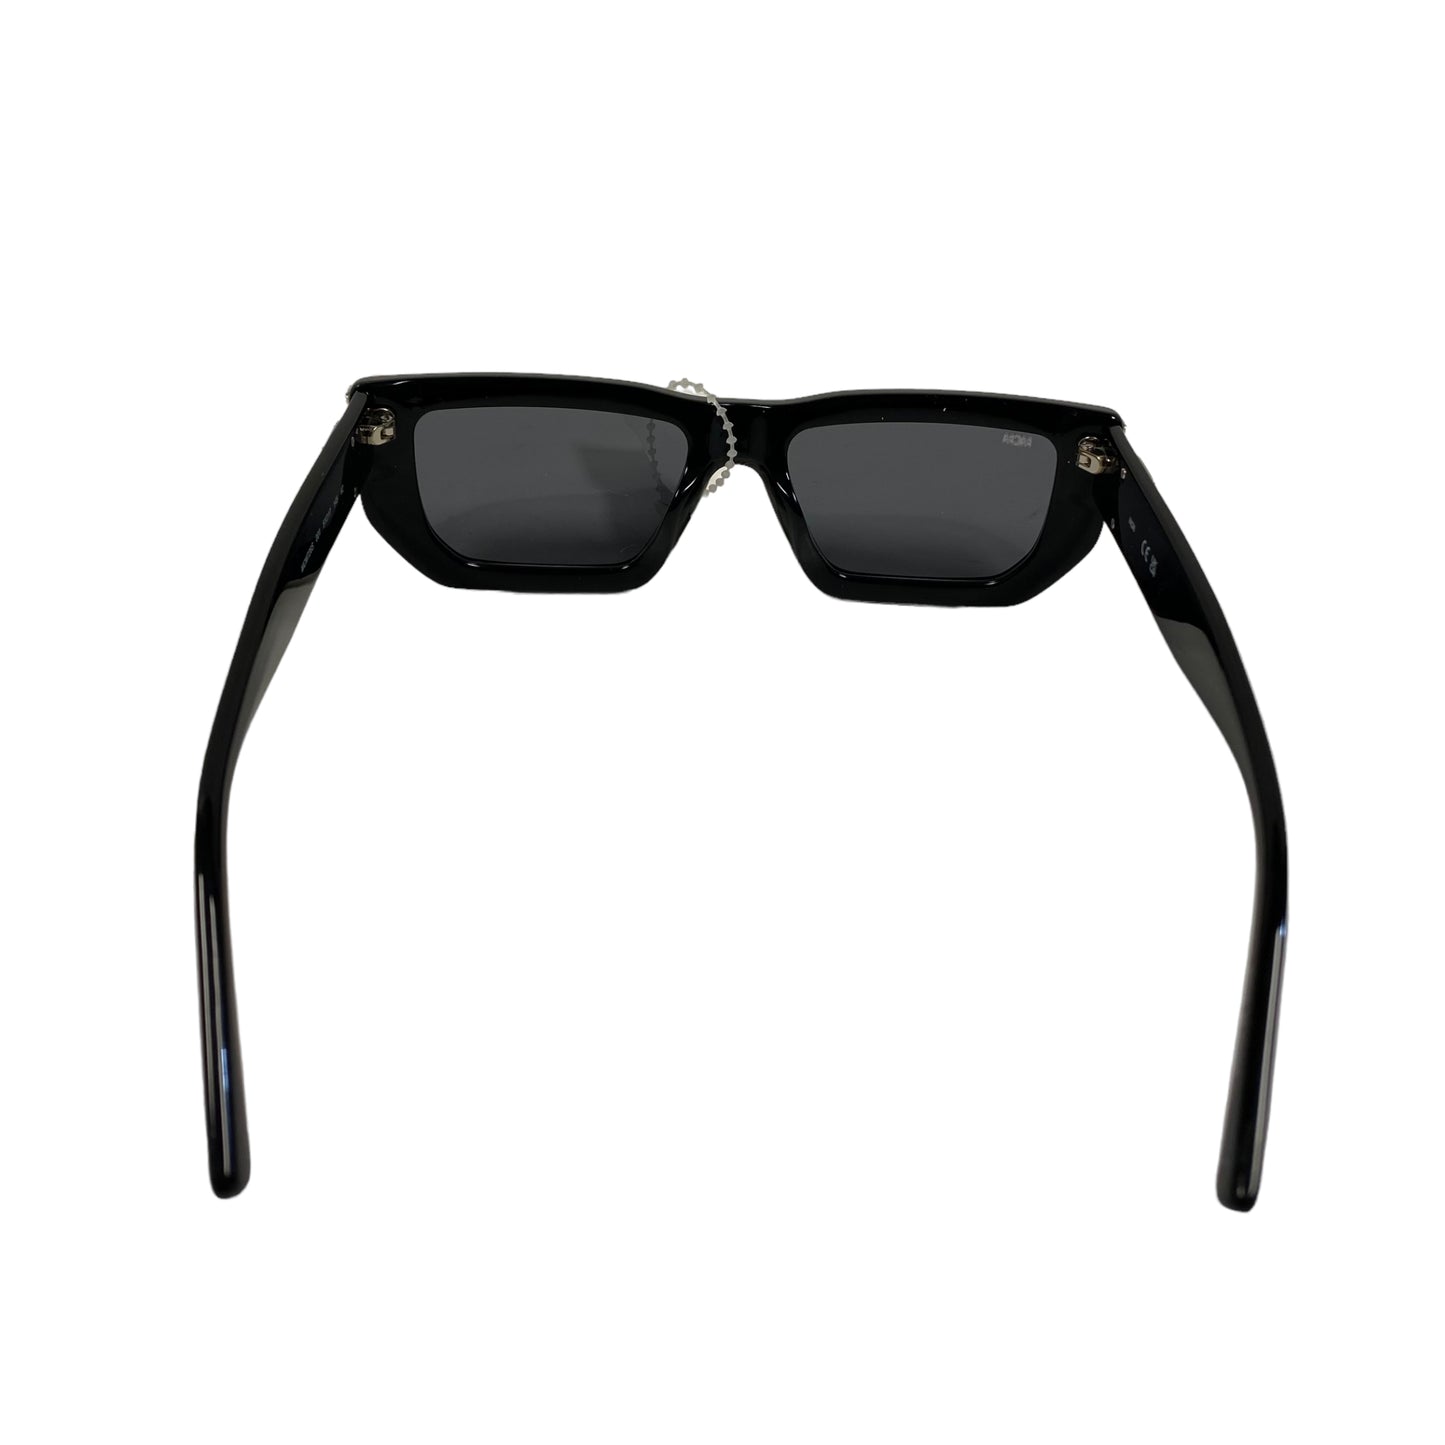 Sunglasses Designer By Mcm